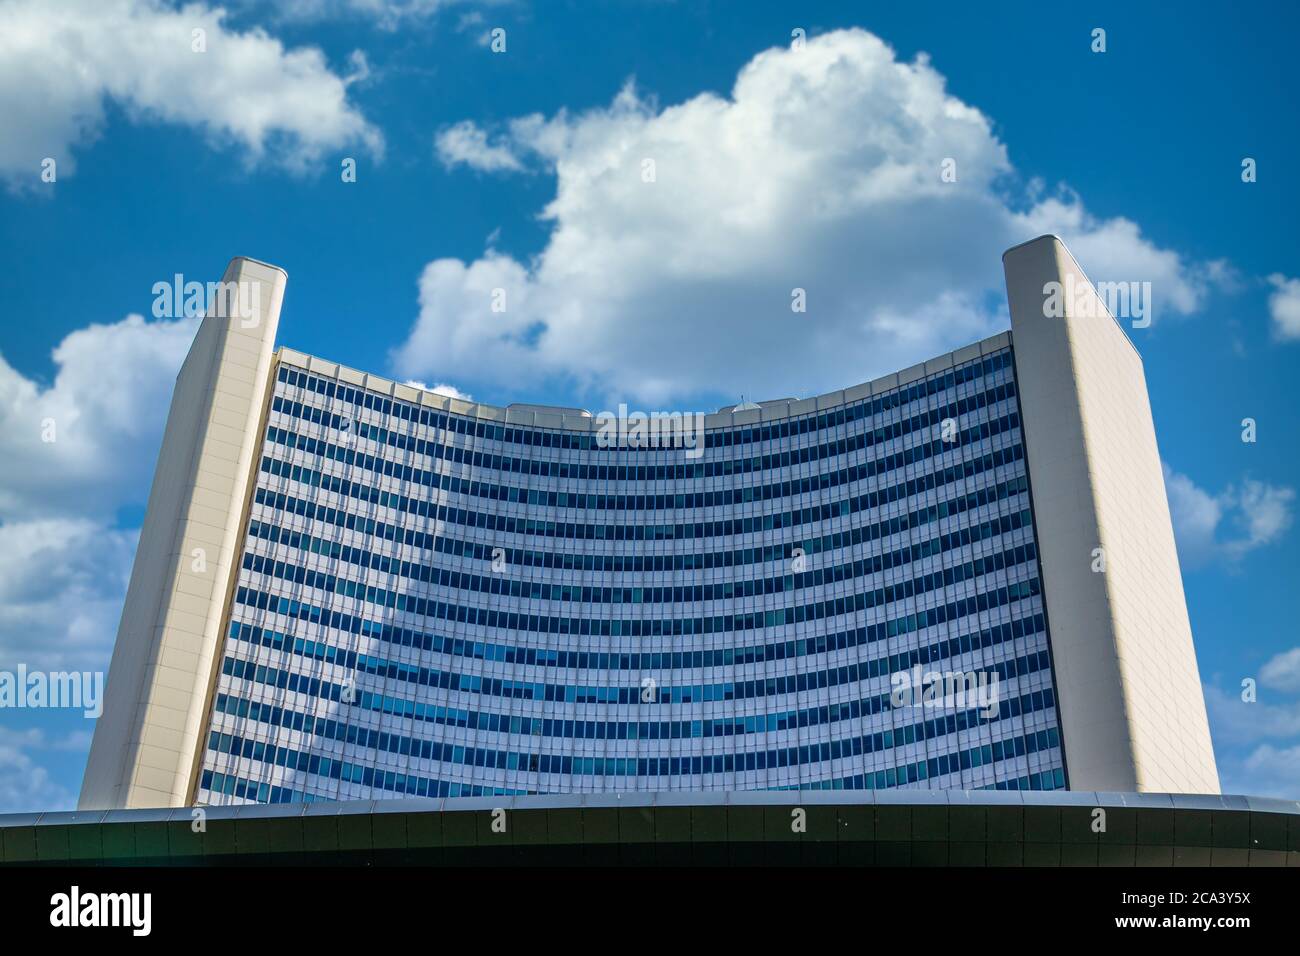 Detail View on Building of United Nations Organization (UNO), ger. Vereinte Nationen in Danube City, Vienna, Austria, Europe Stock Photo